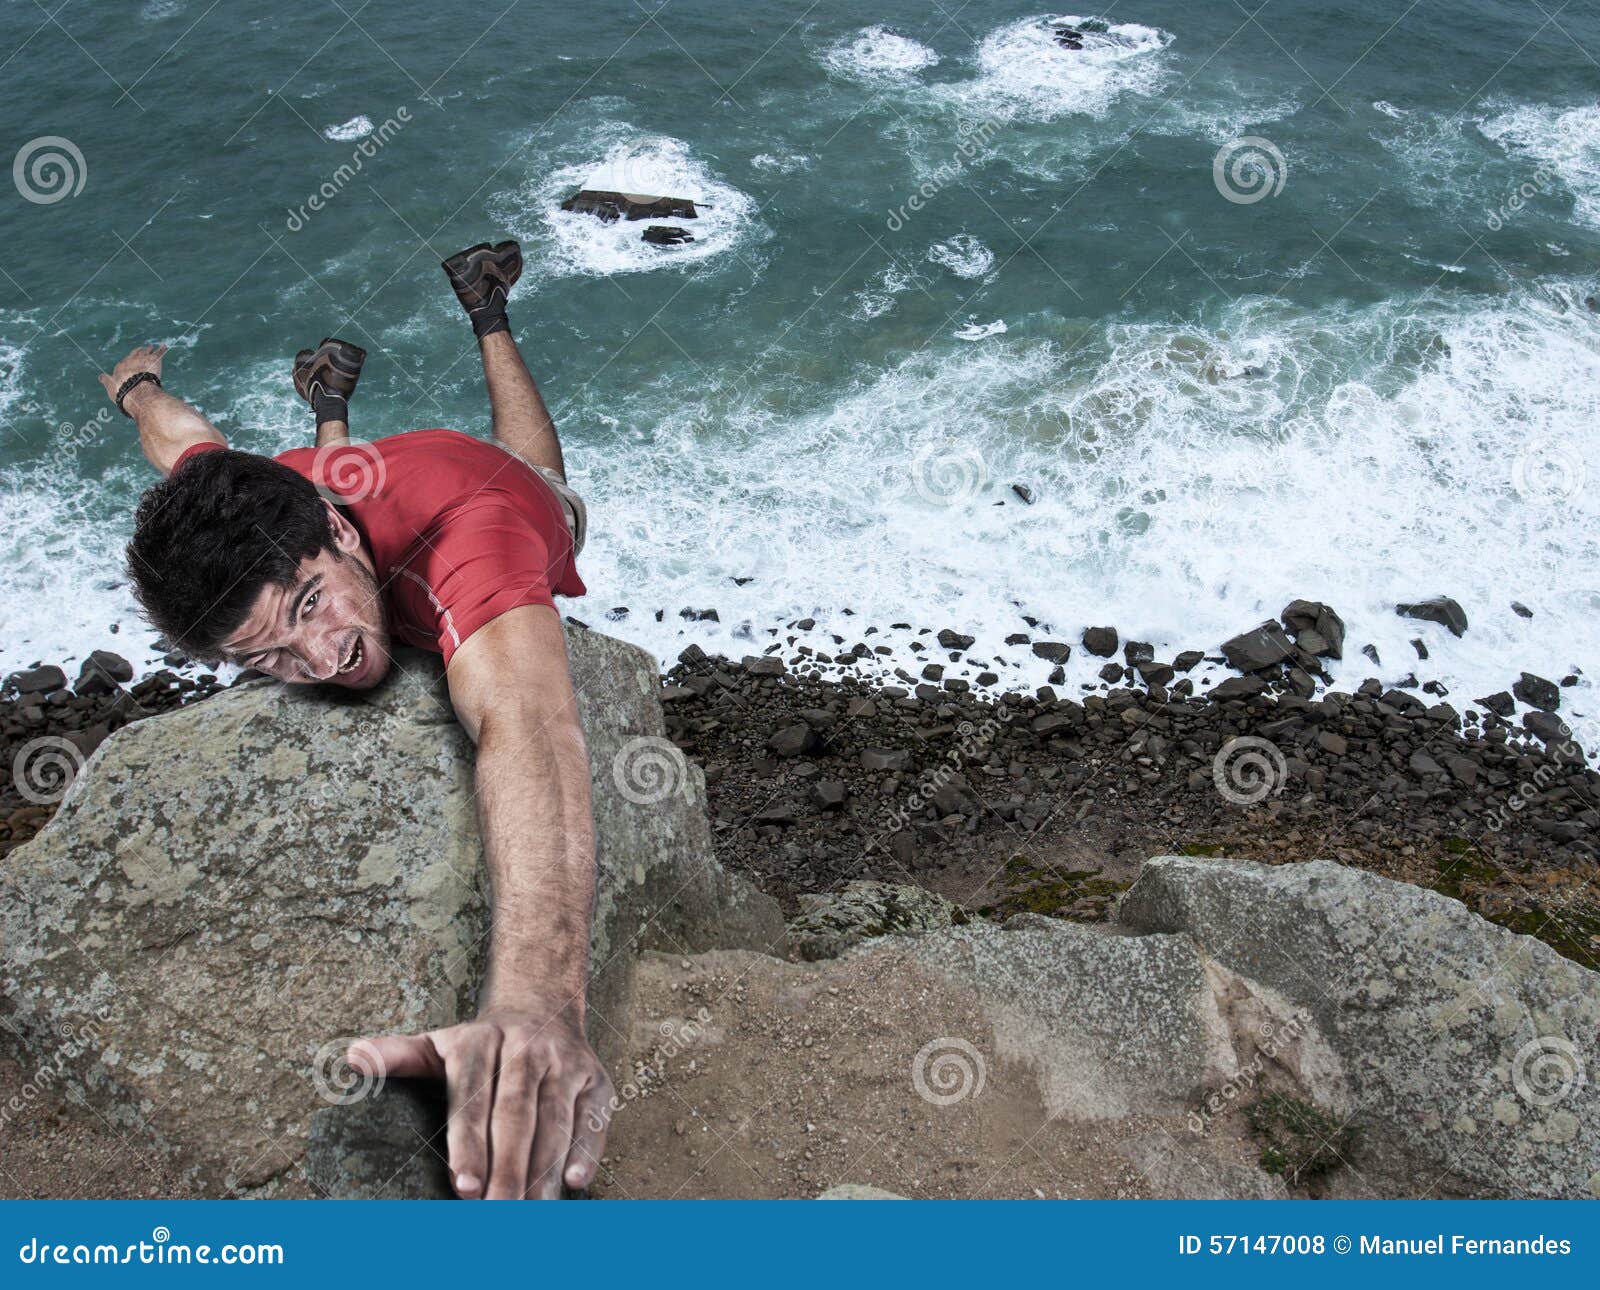 adventure rock climbing man